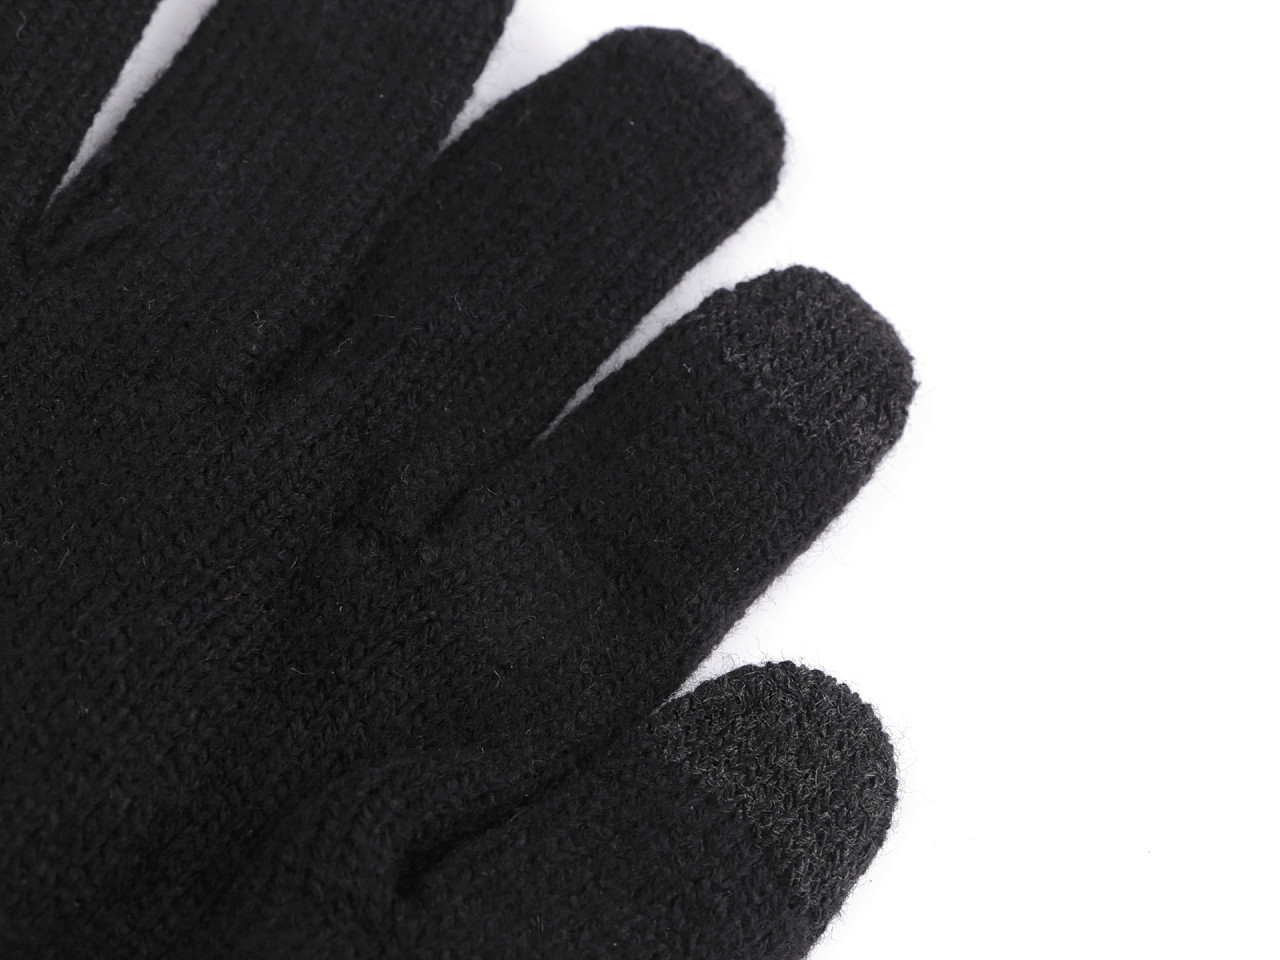 Gestrickte Damenhandschuhe, schwarz, 1 Paar